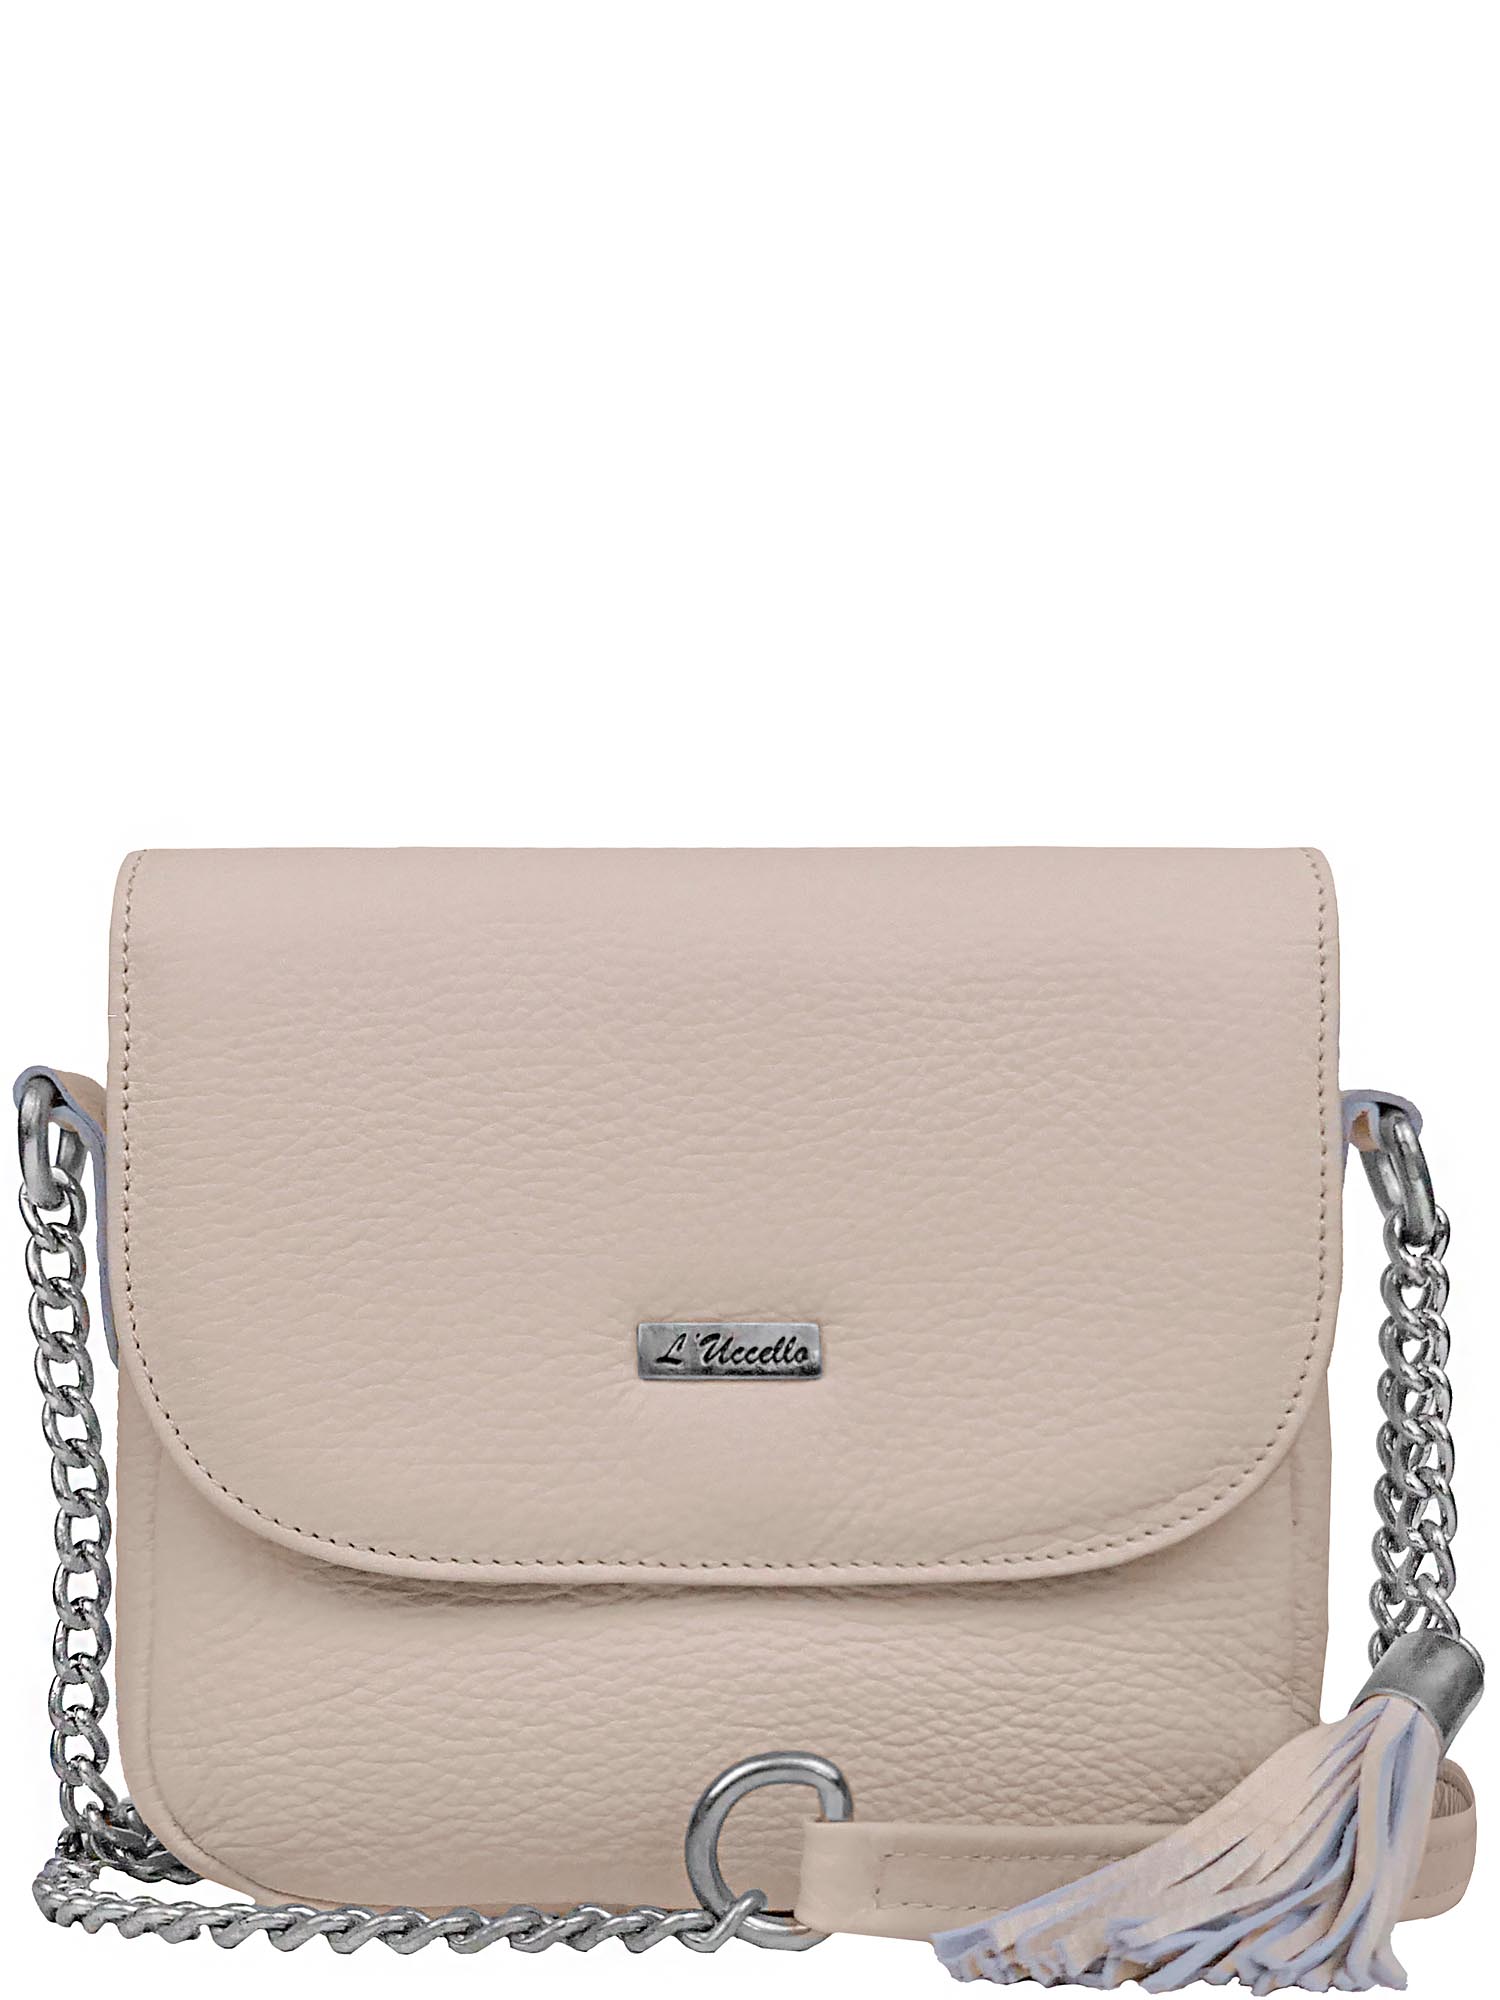 Комплект (брелок+сумка) женский LUccello 4051, светло-бежевый L'Uccello. Цвет: бежевый